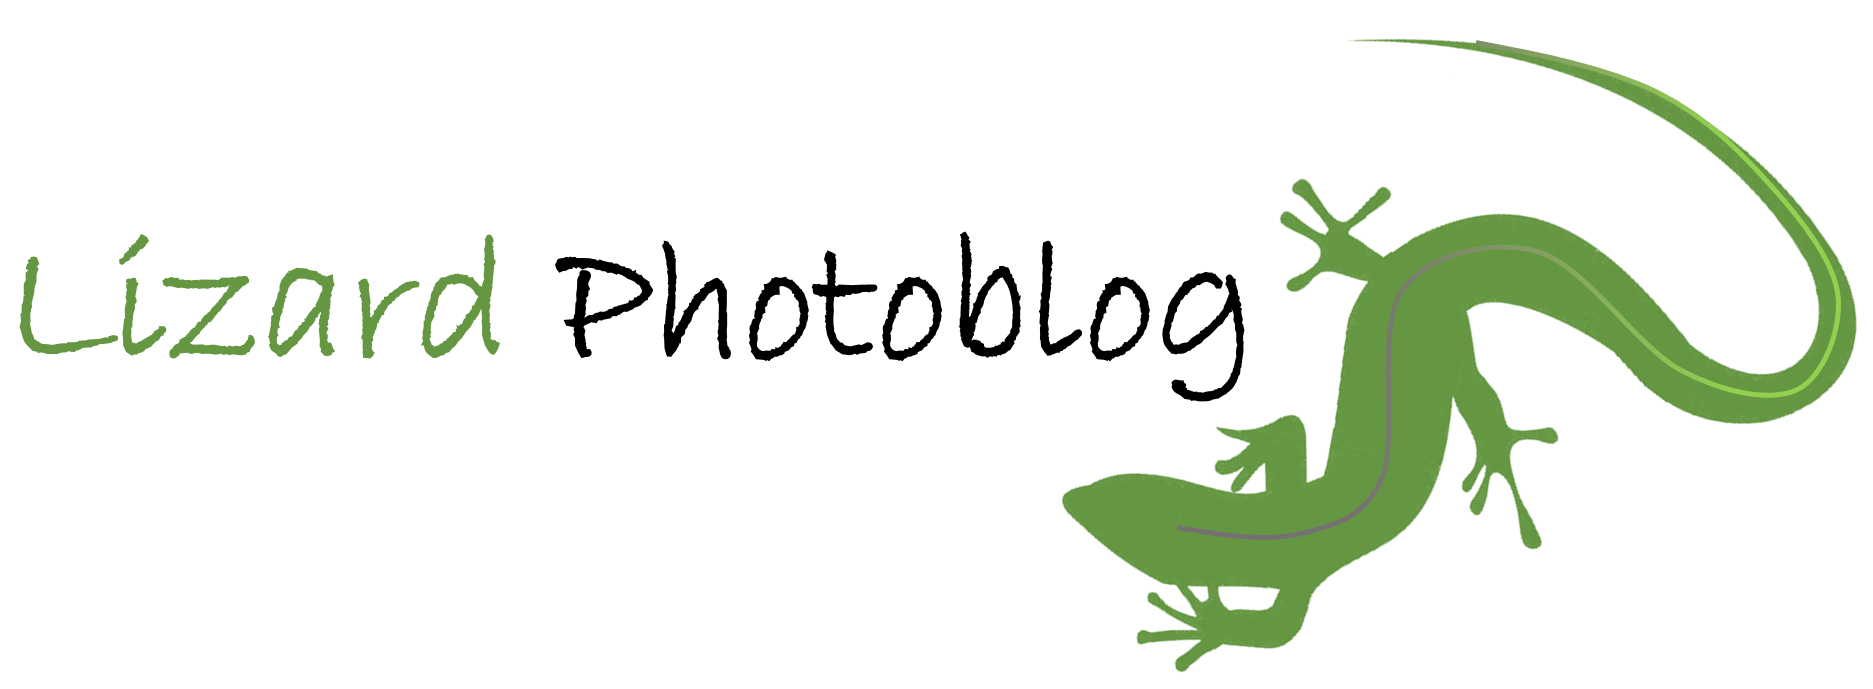 Lizard Photo Blog